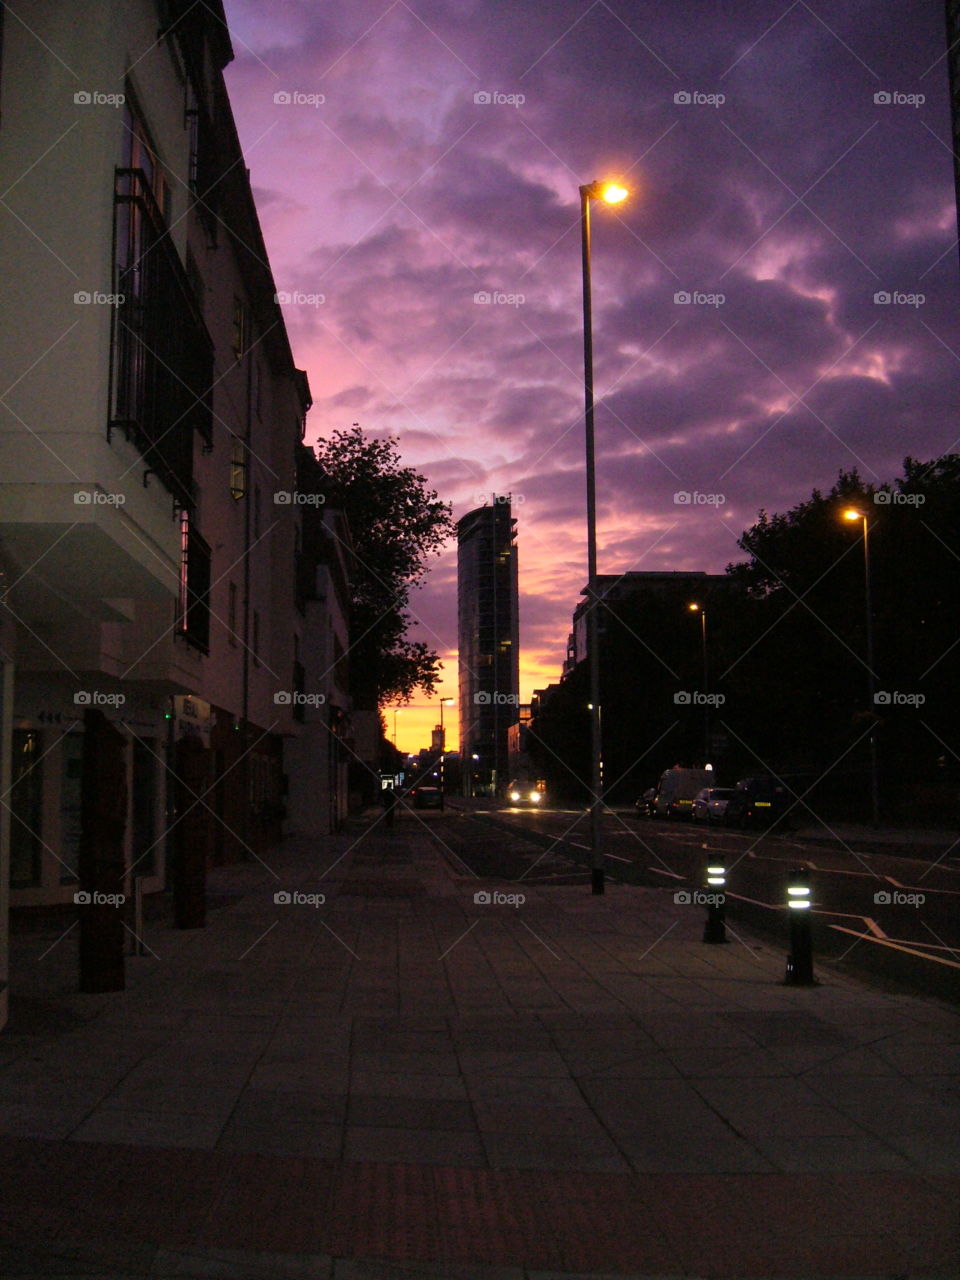 The sun sets in purple